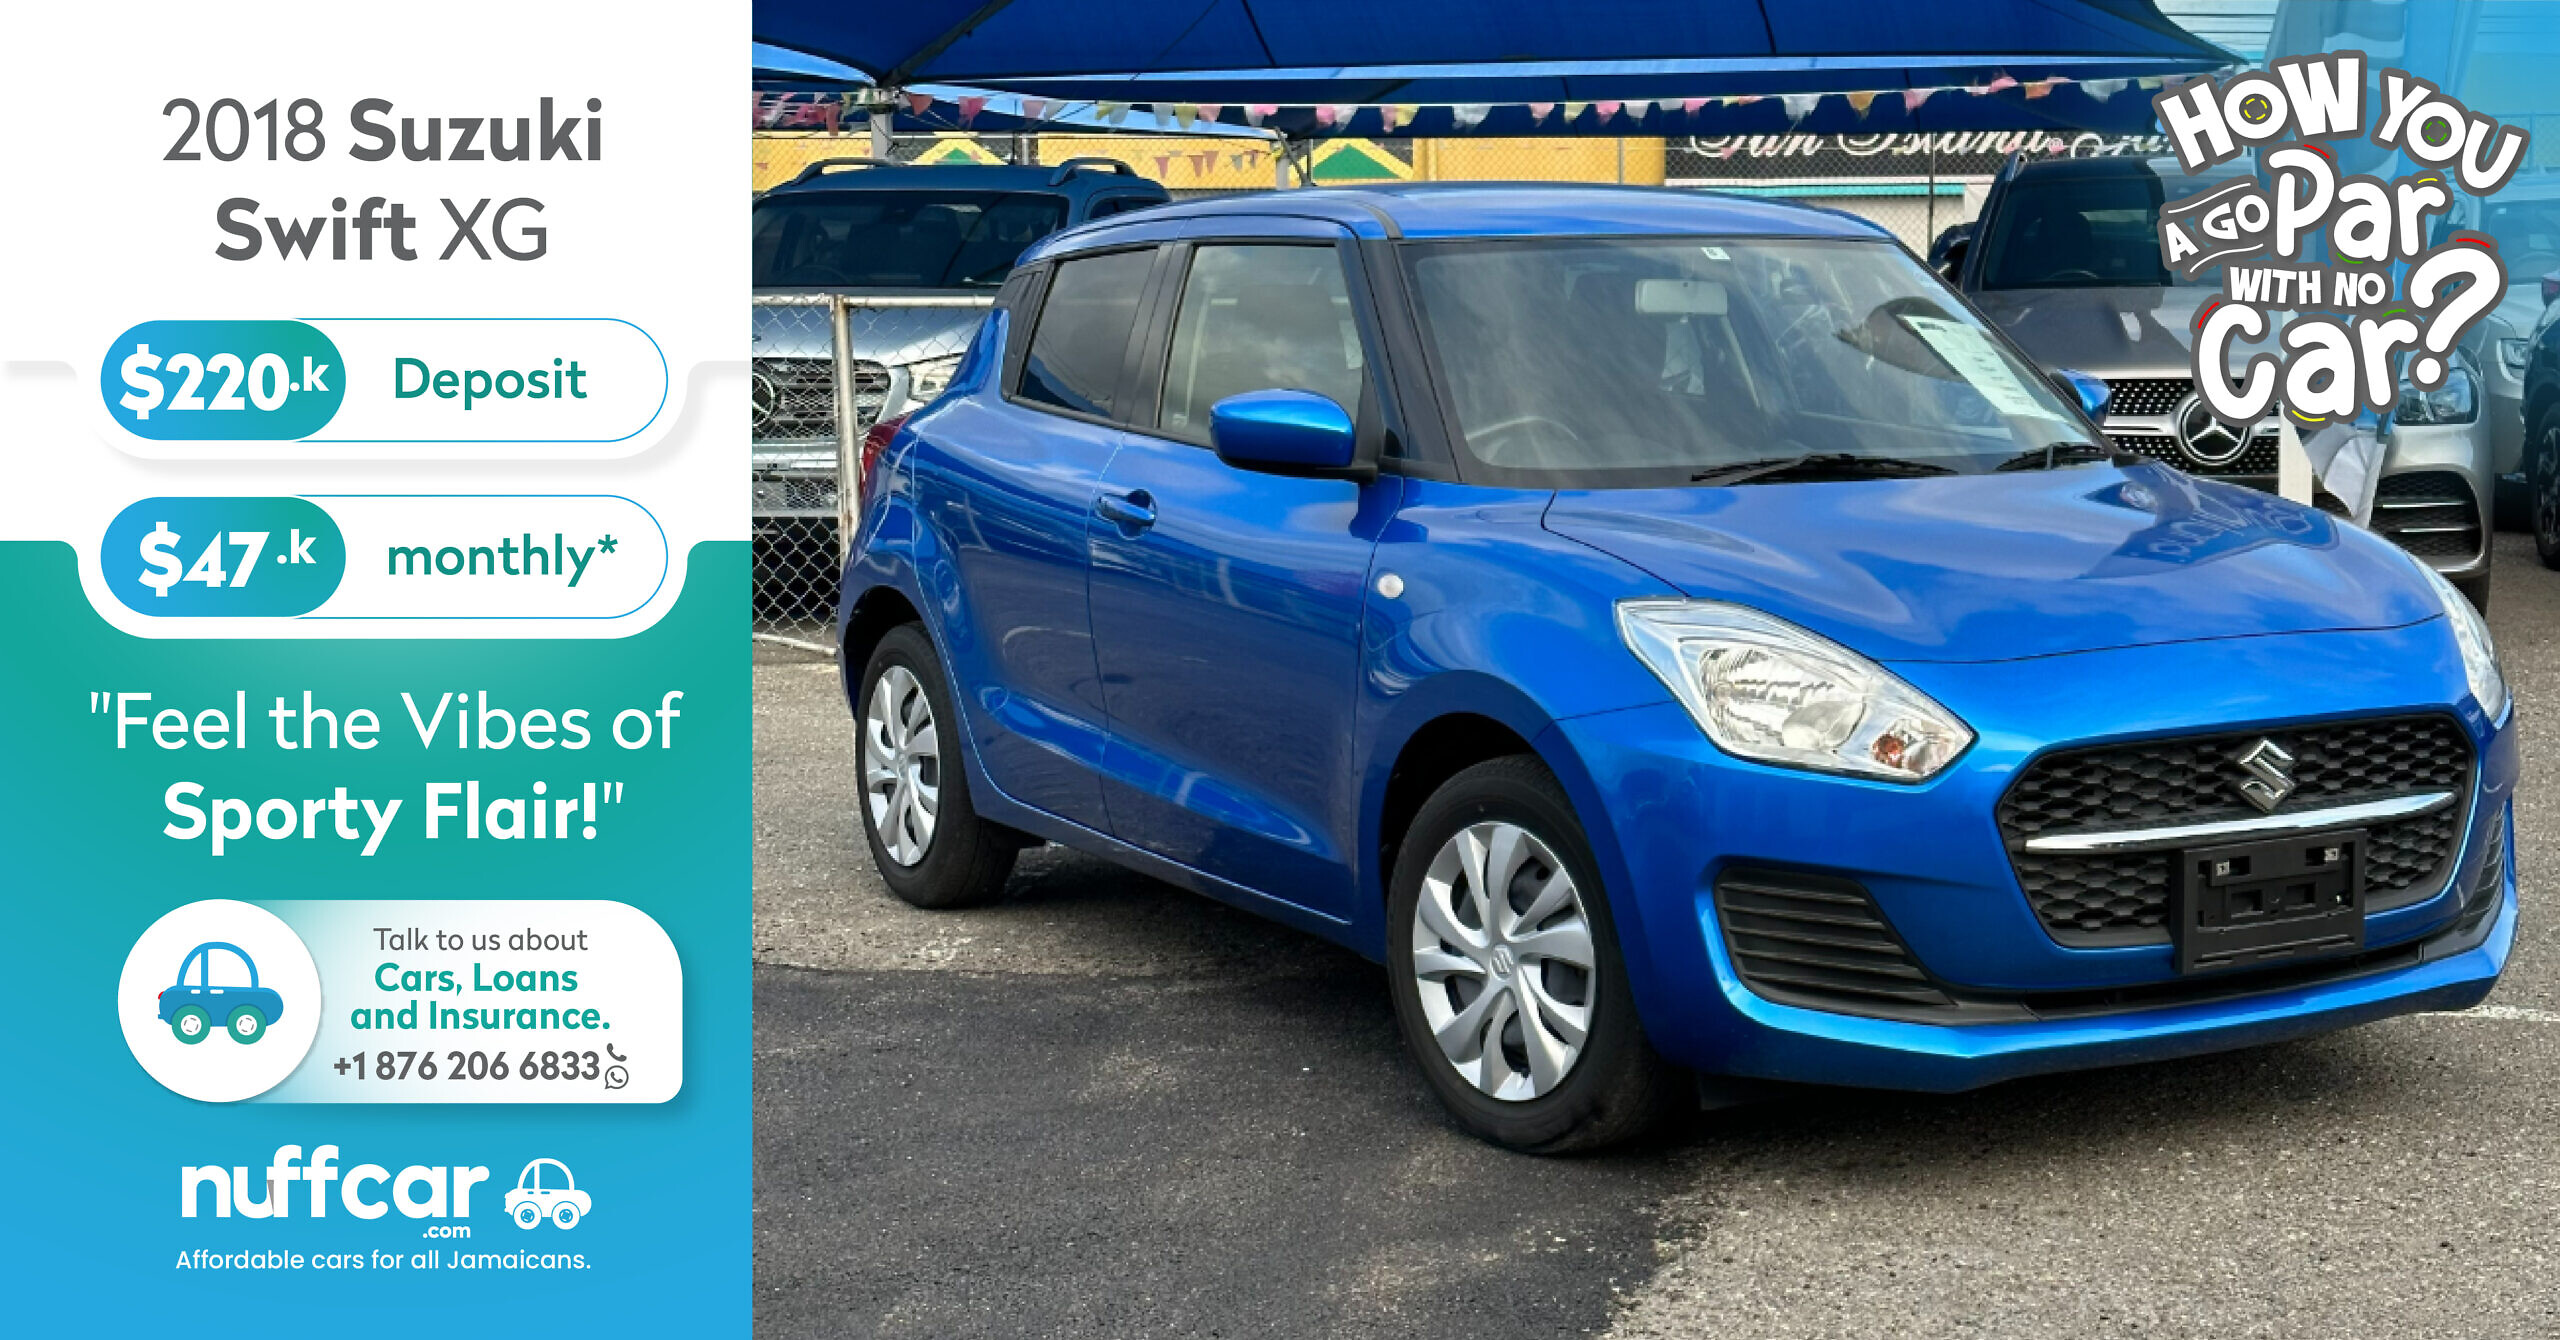 2018 Suzuki Swift XG – Get a Fast n Easy Low Deposit Car Loan